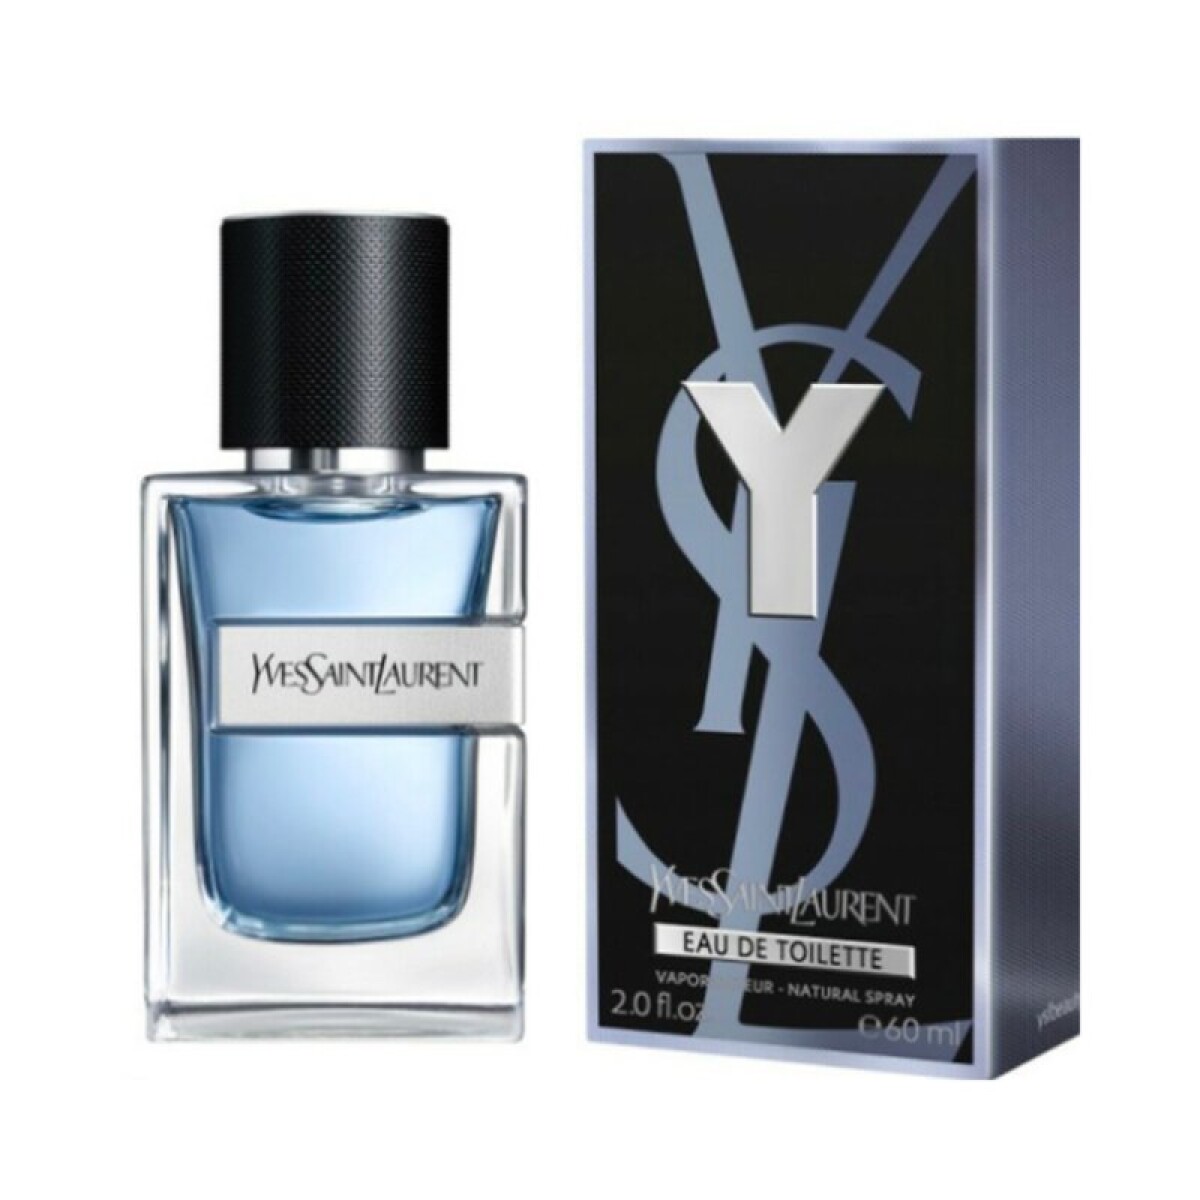 Perfume Yves Saint Laurent Edt 60 Ml - 001 